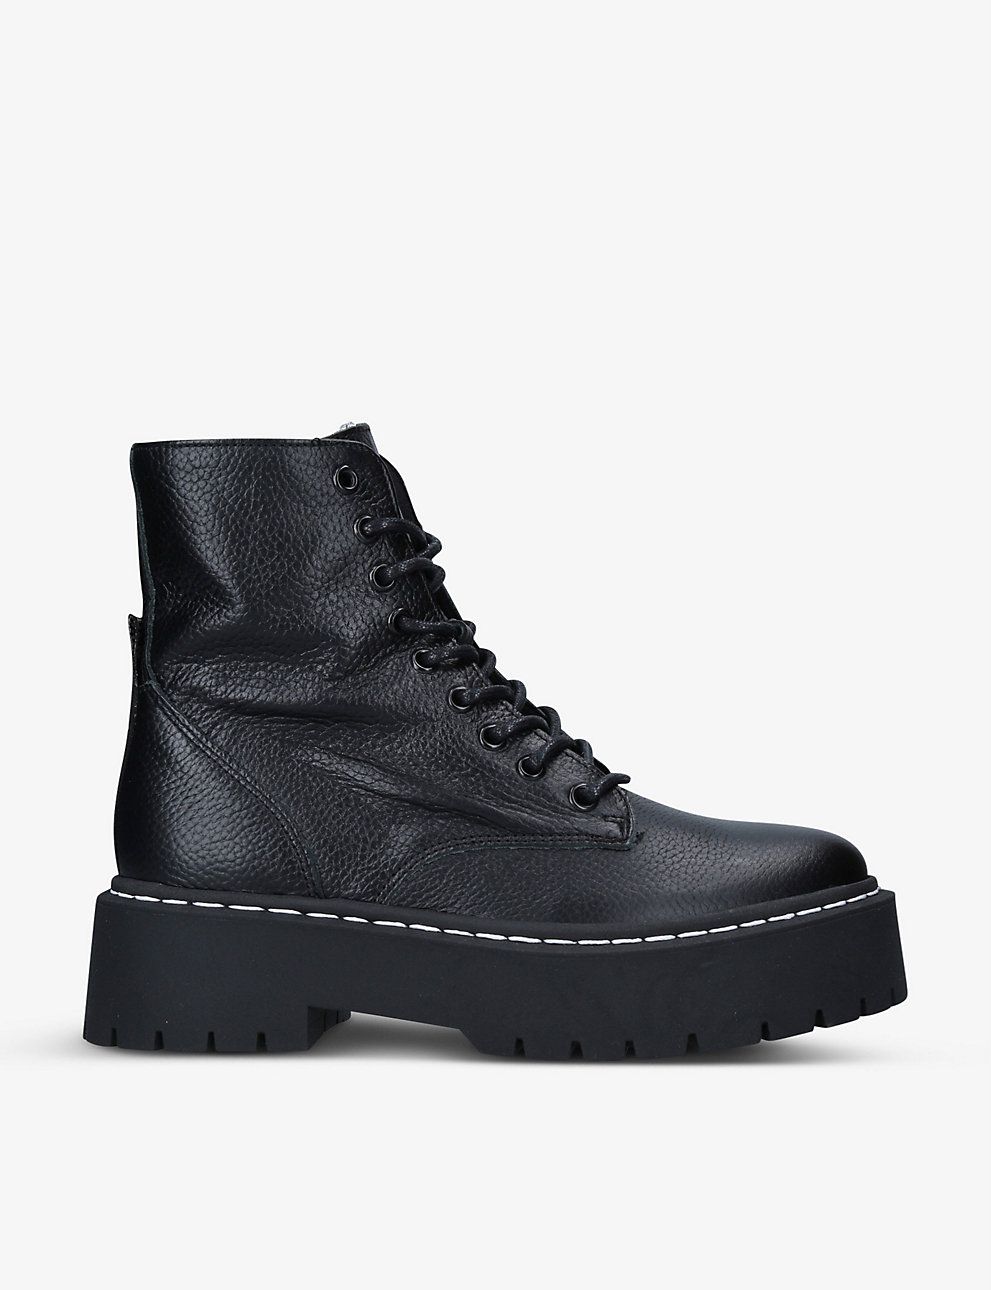 Skylar lace-up leather boots | Selfridges